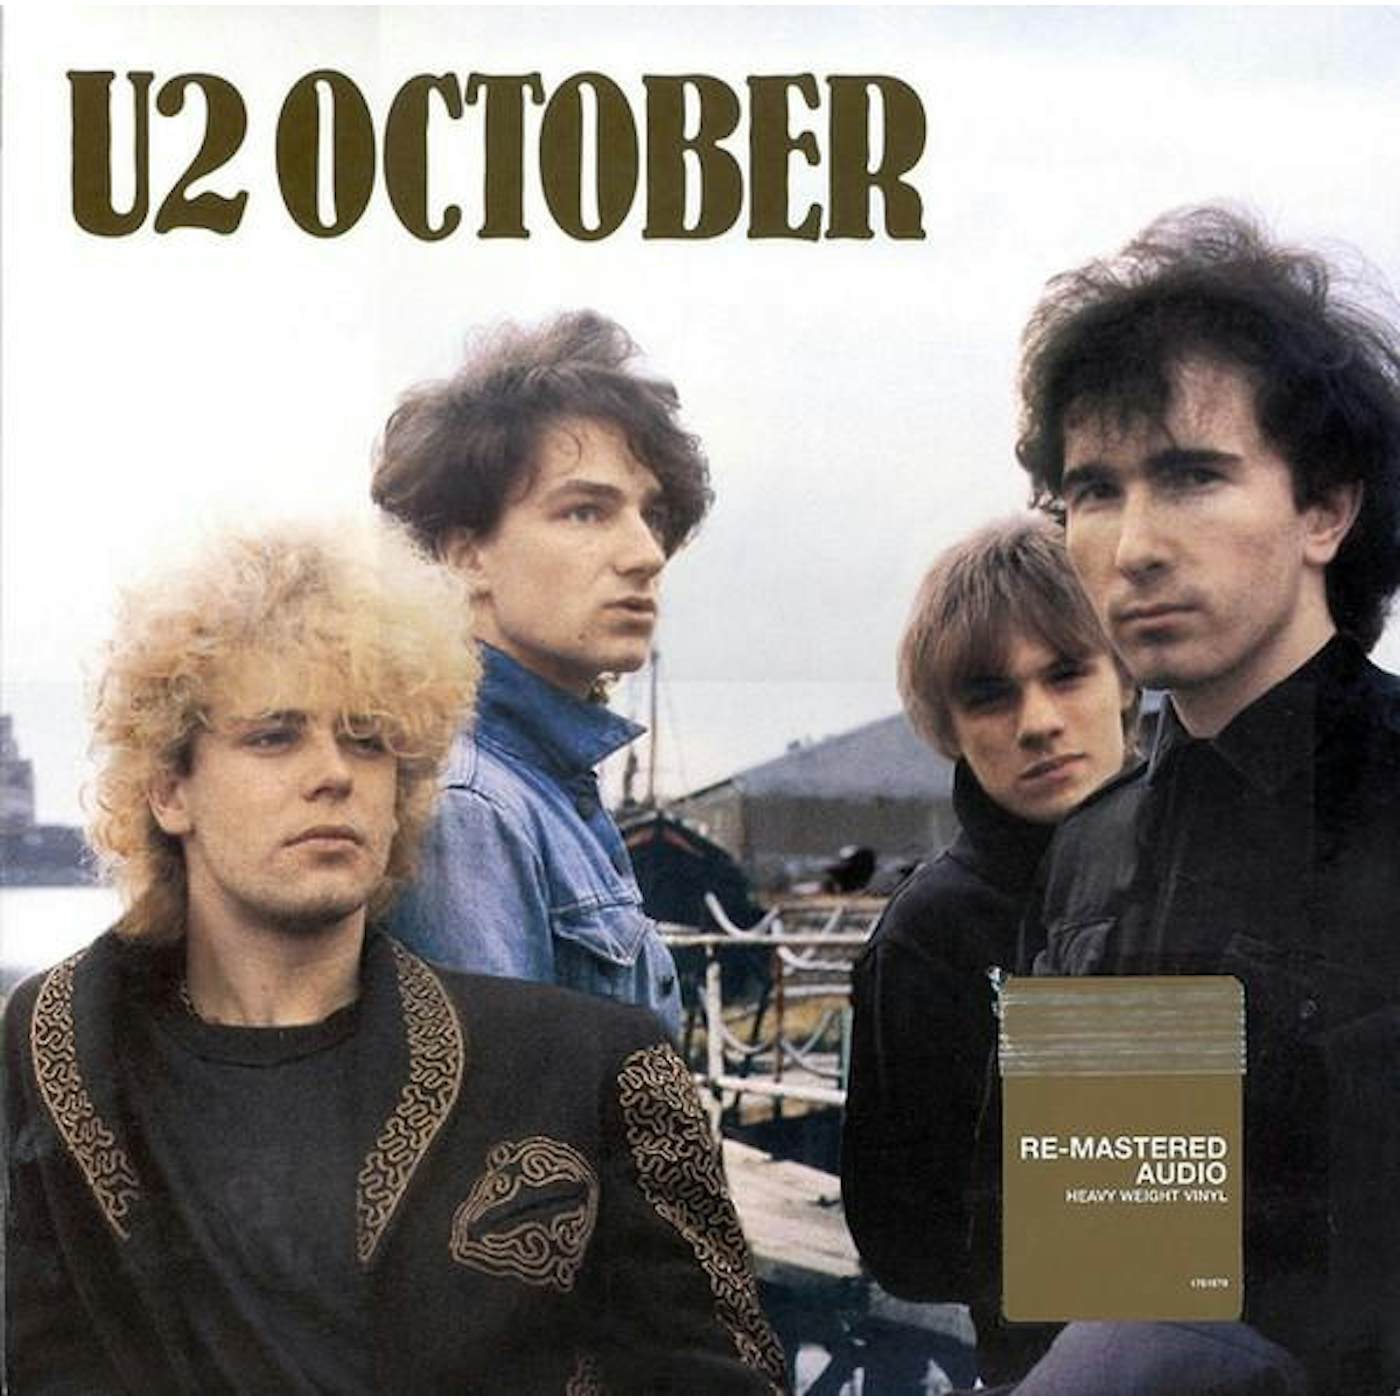 U2 October Vinyl Record